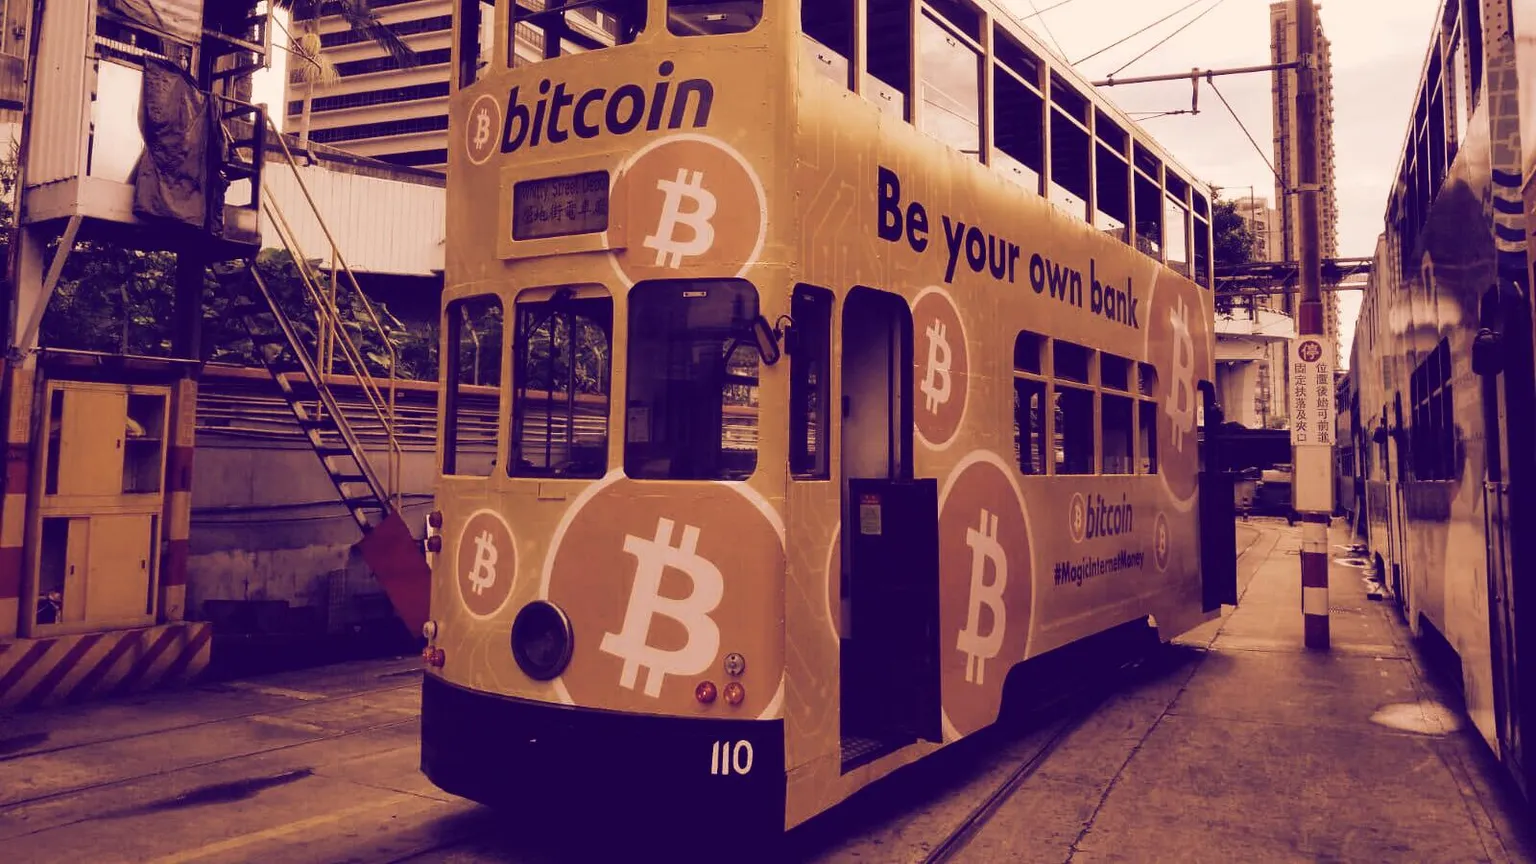 Los tranvías con publicidad de Bitcoin desfilarán por Hong Kong. Imagen: BAHK